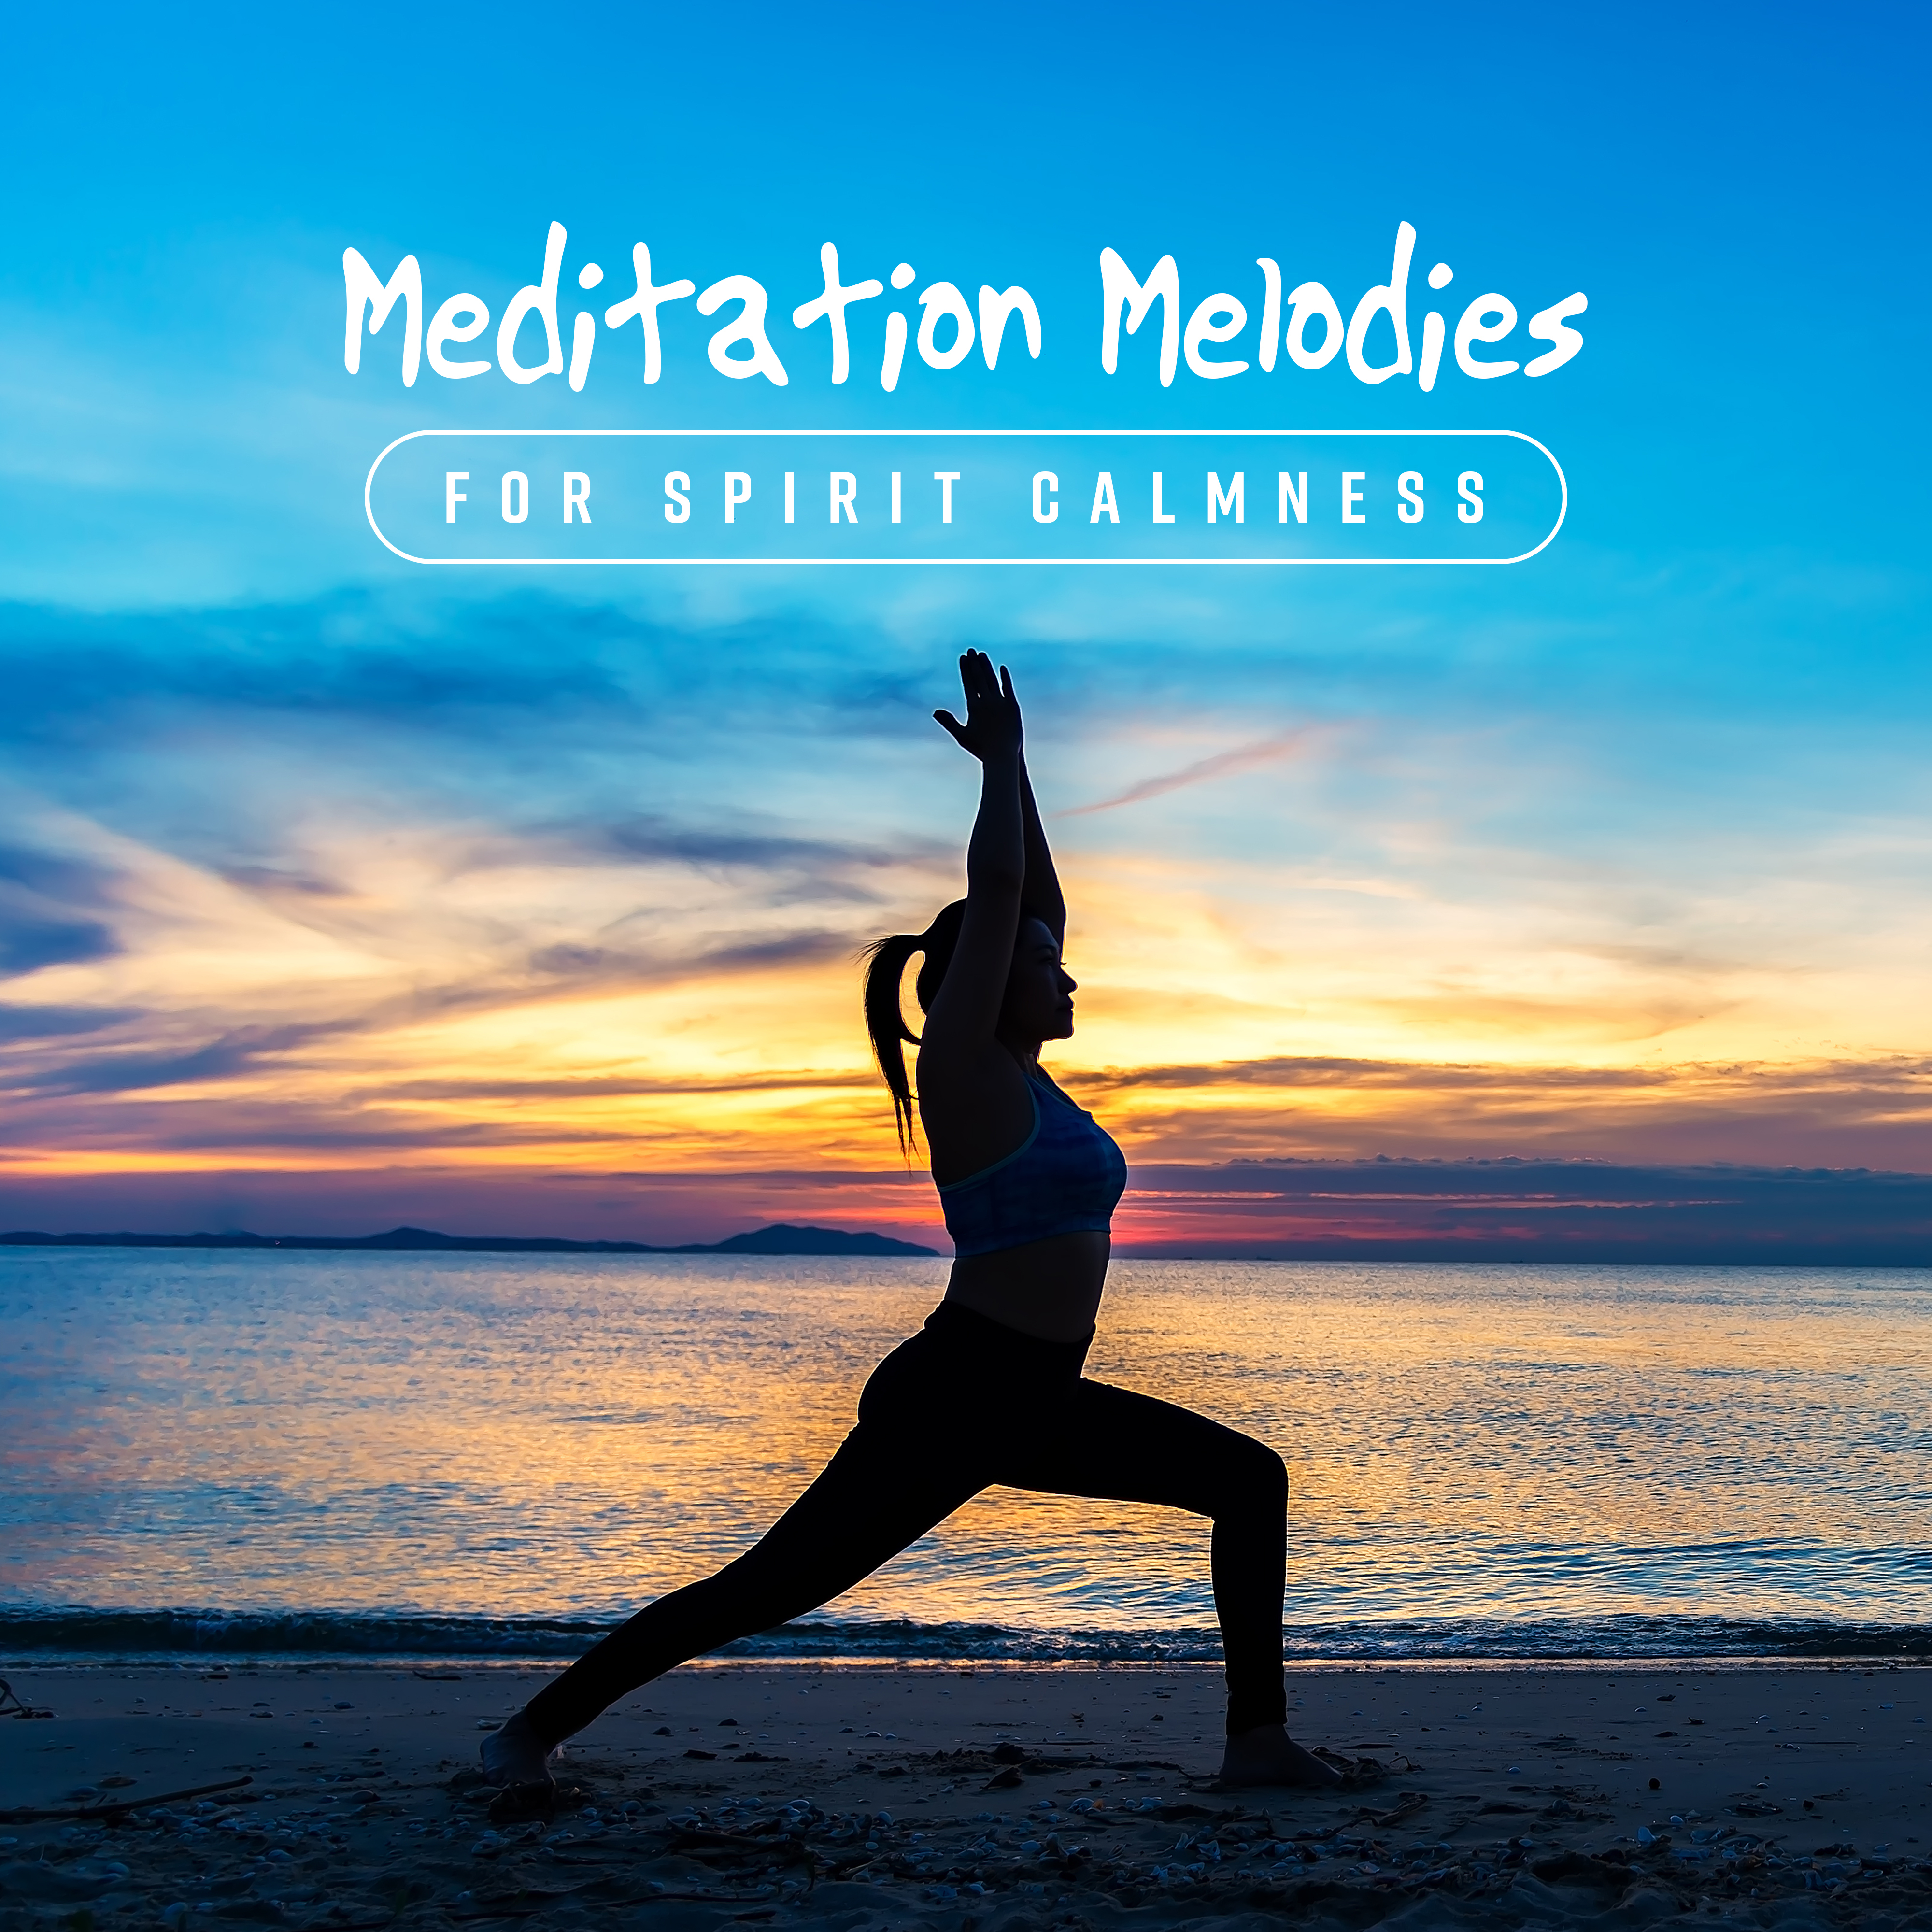 Meditation Melodies for Spirit Calmness